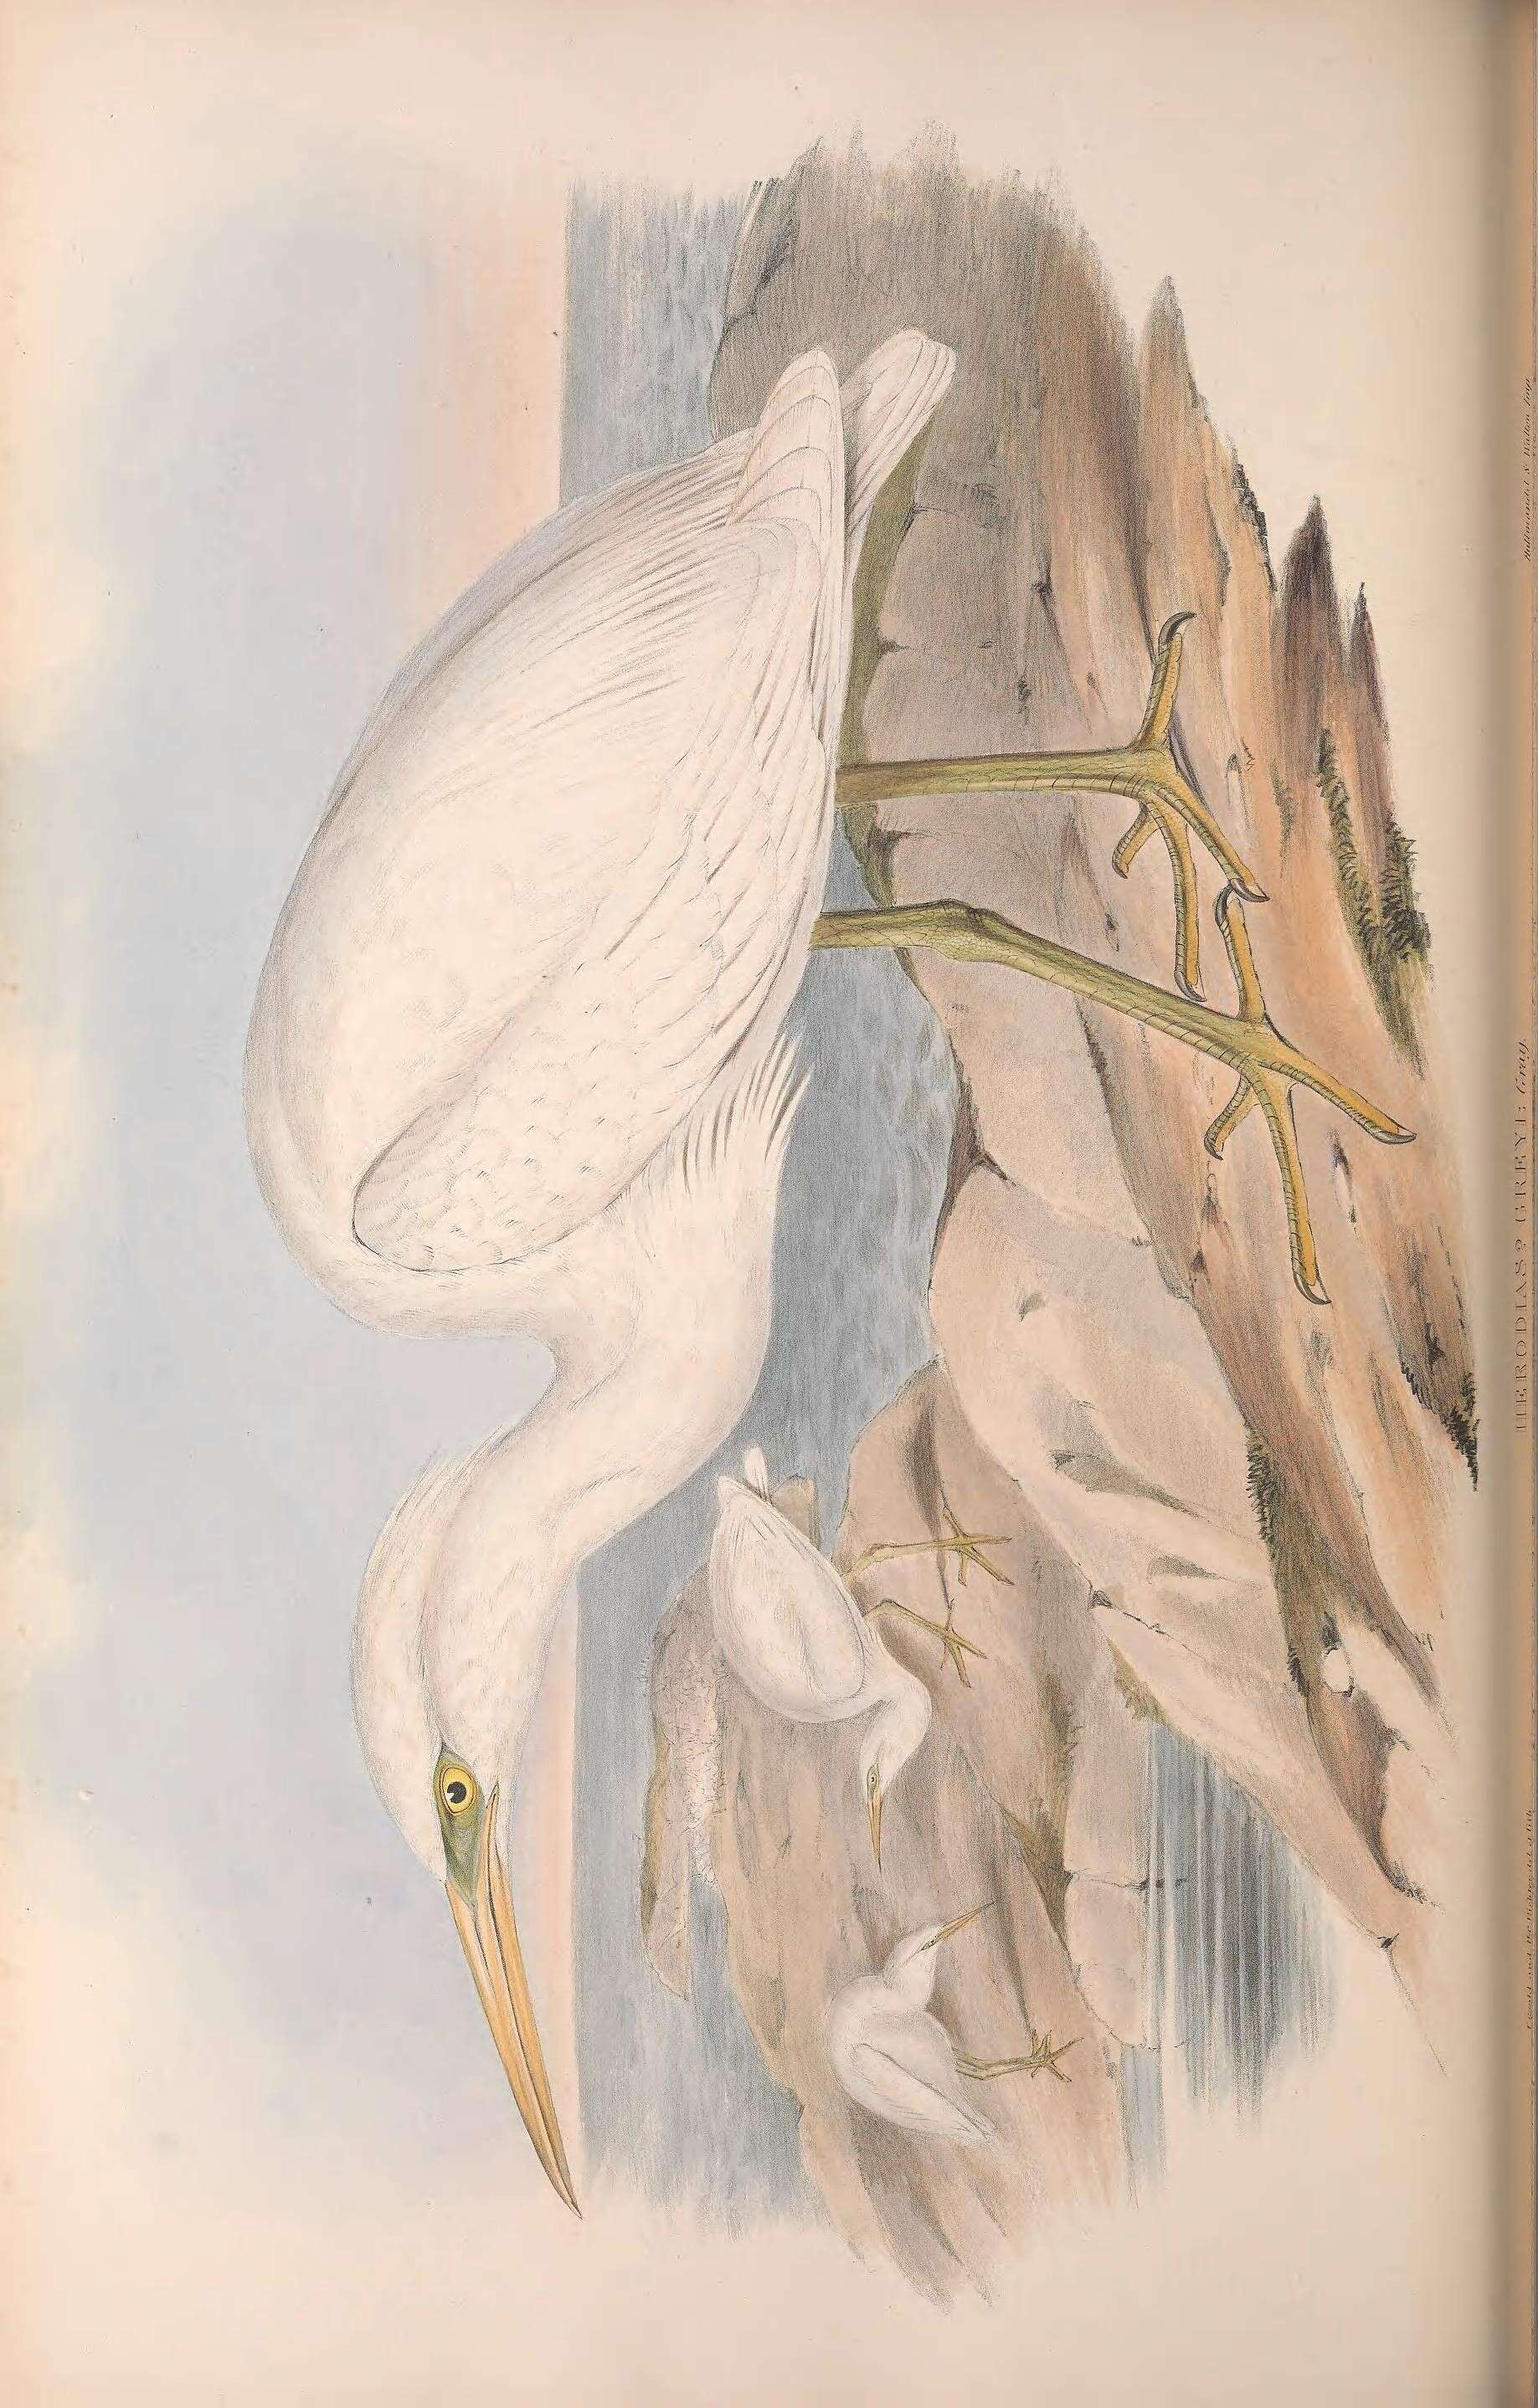 Image of Eastern Reef Egret